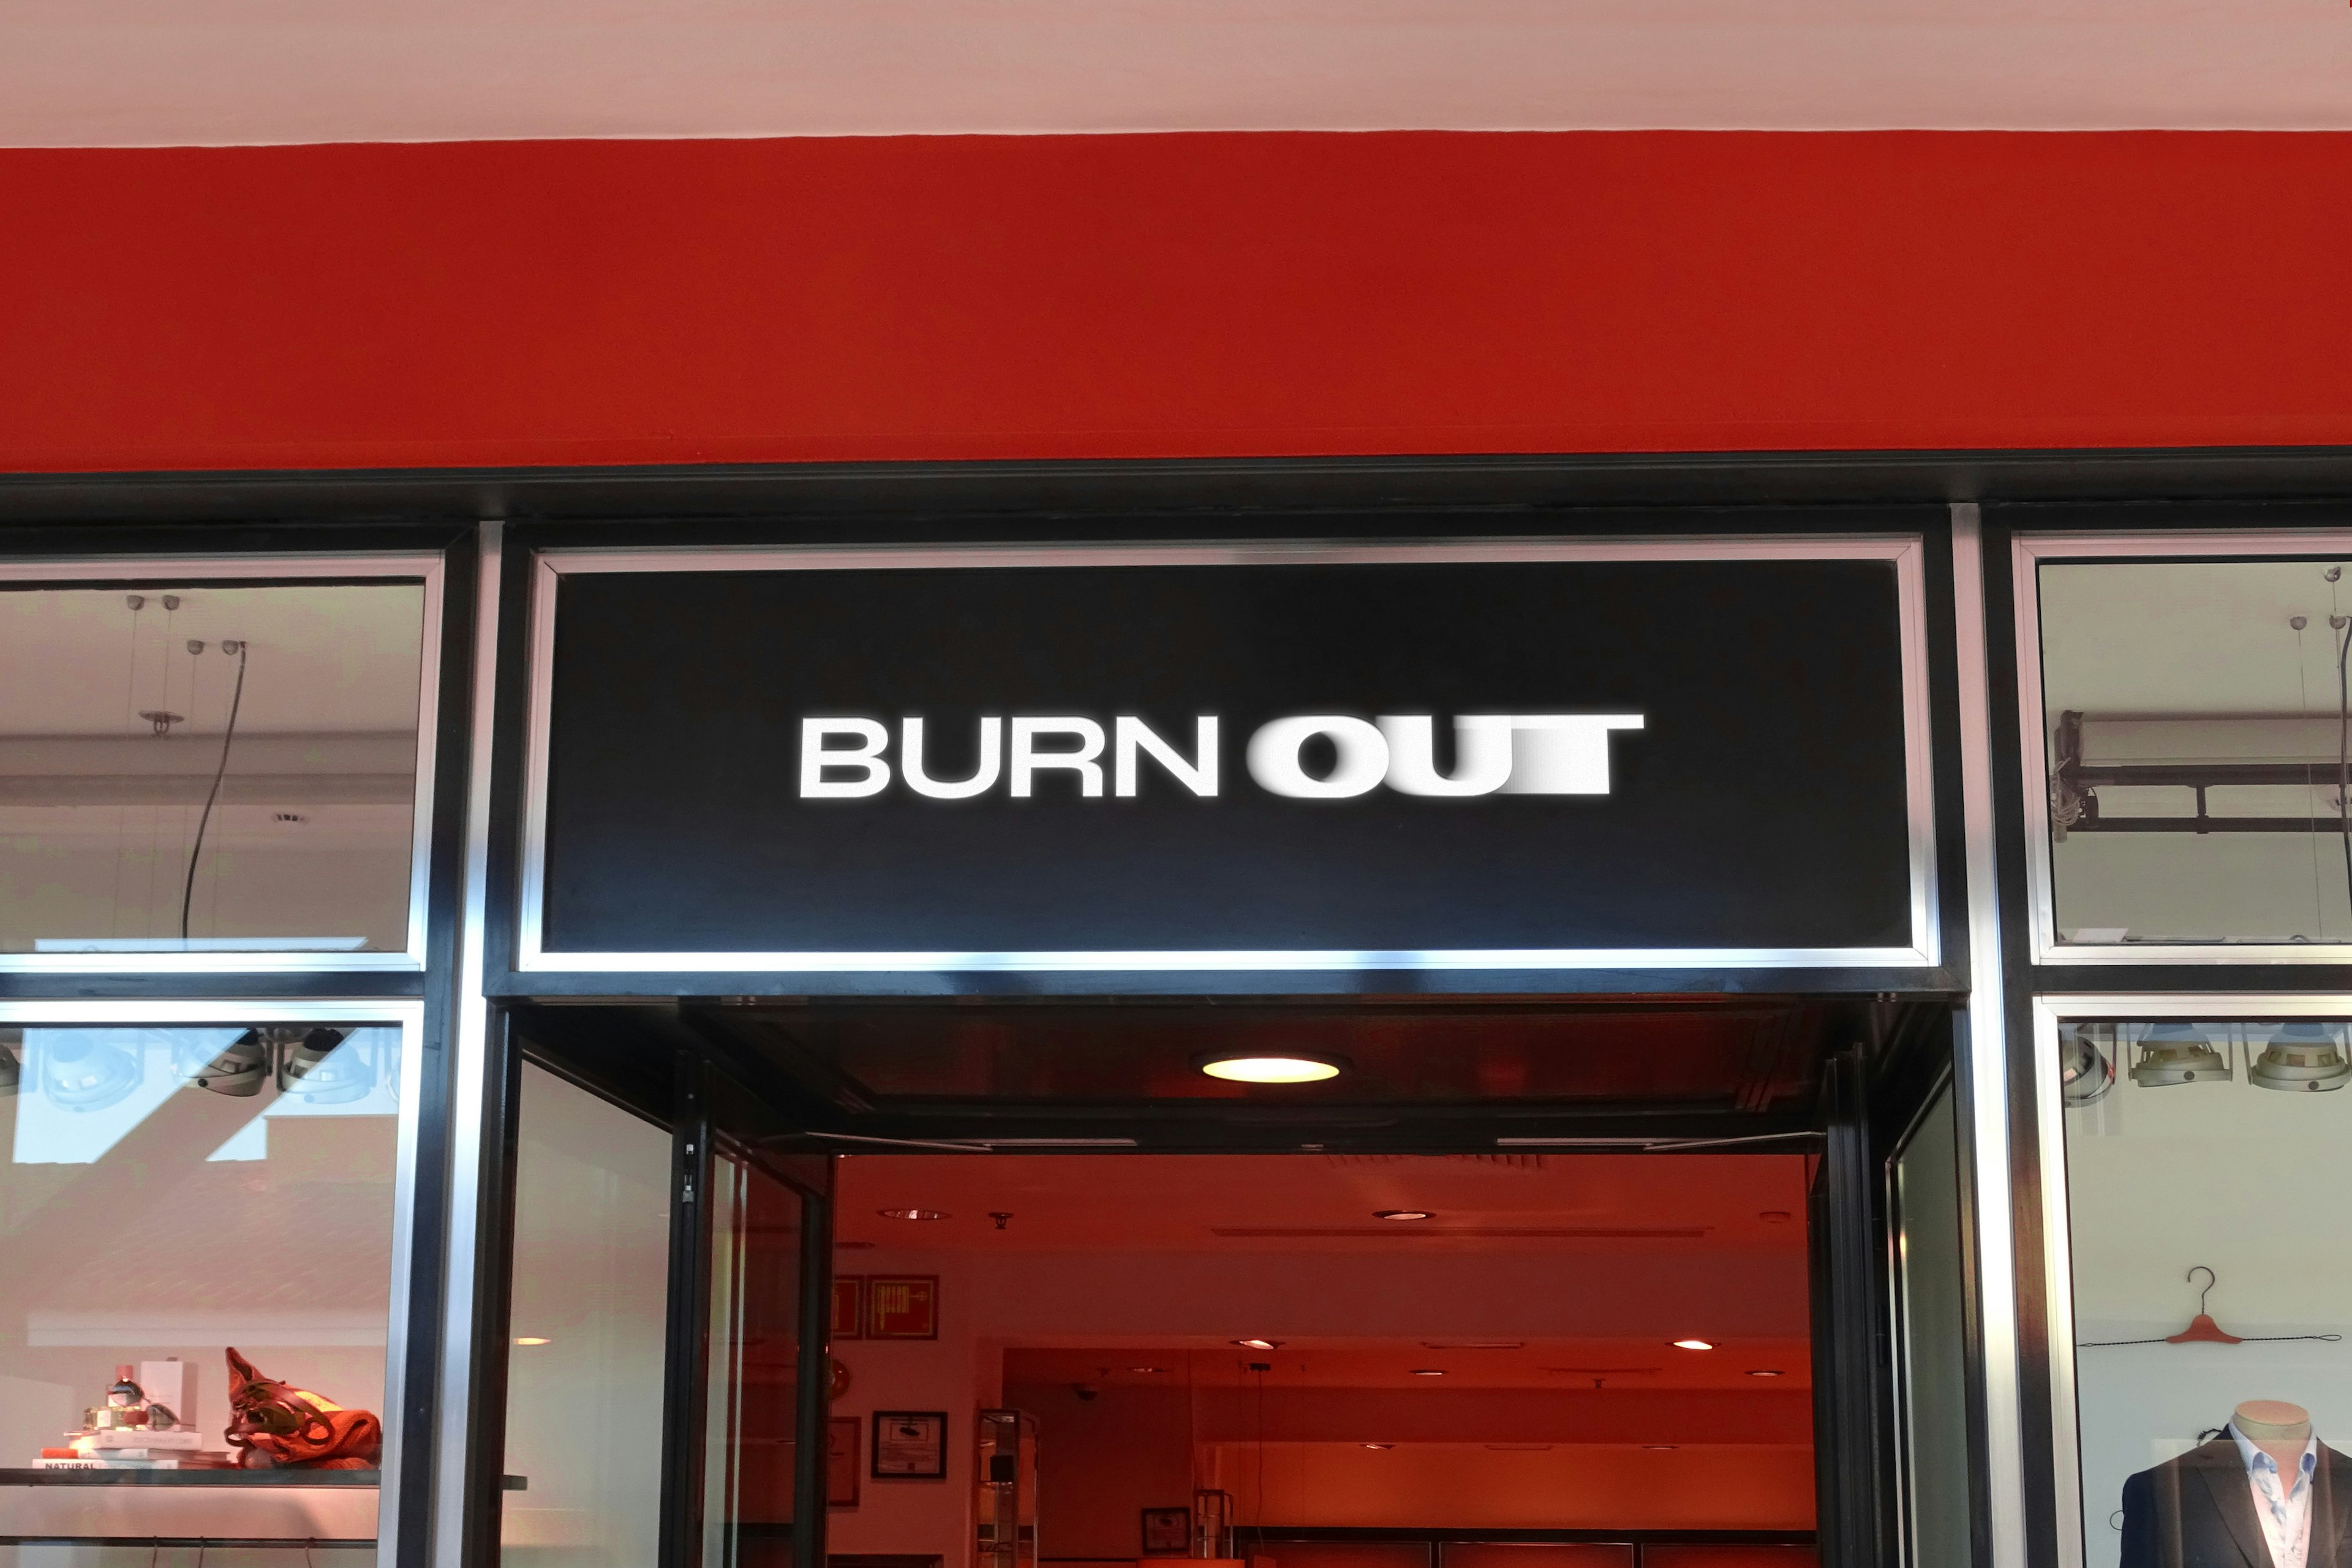 Burnout themed building sign